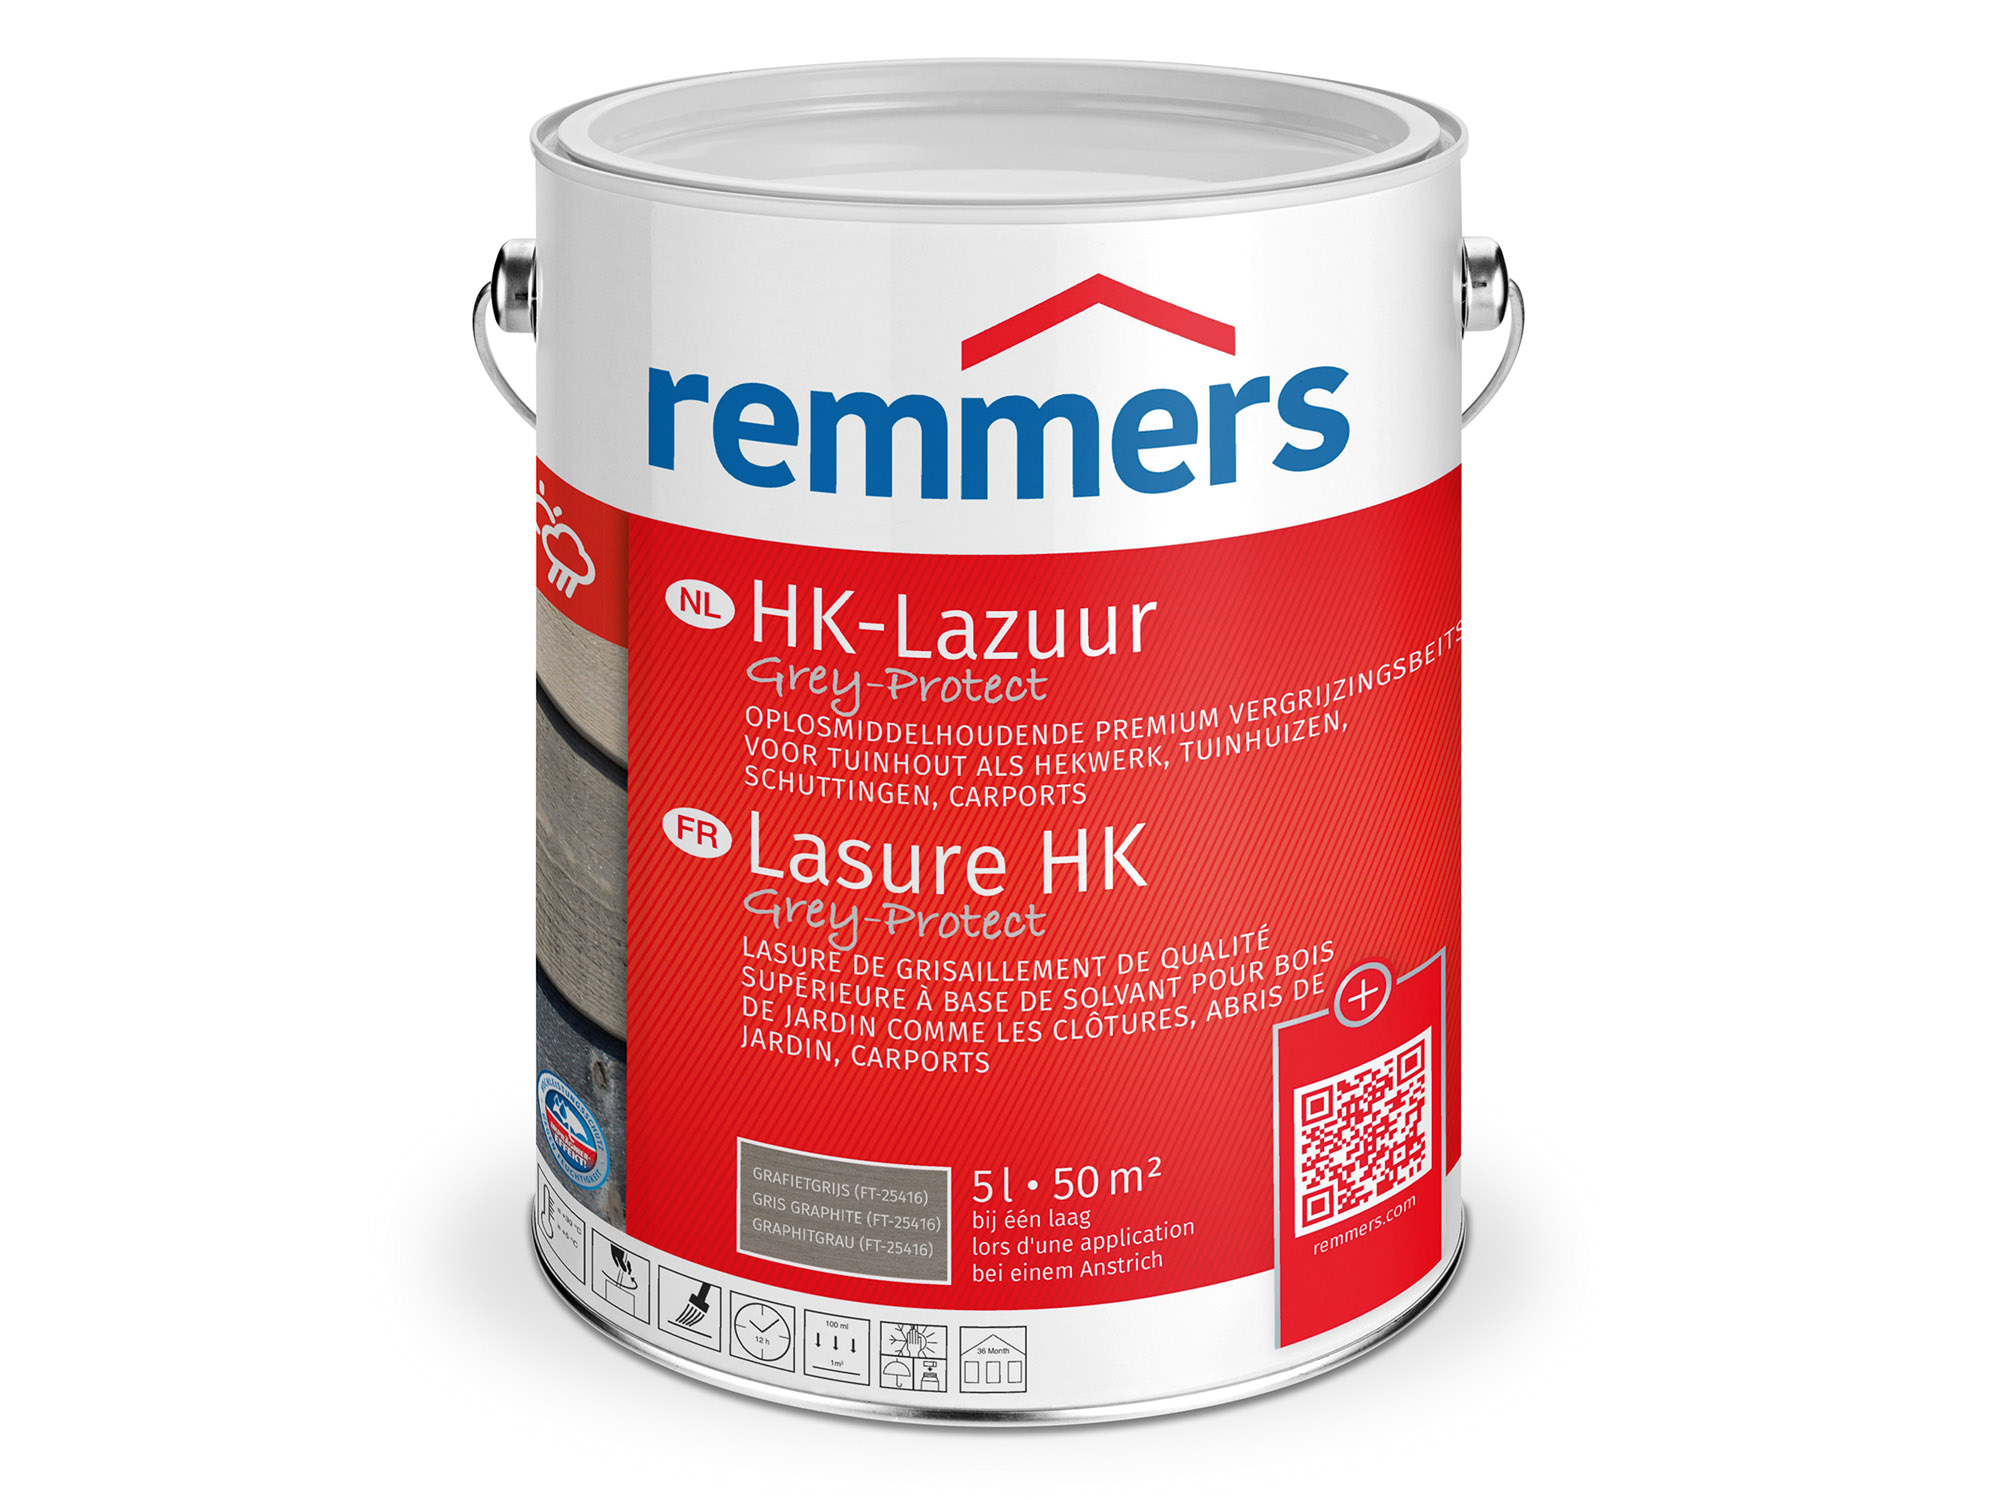 Remmers HK-Lazuur Grey Protect grafietgrijs